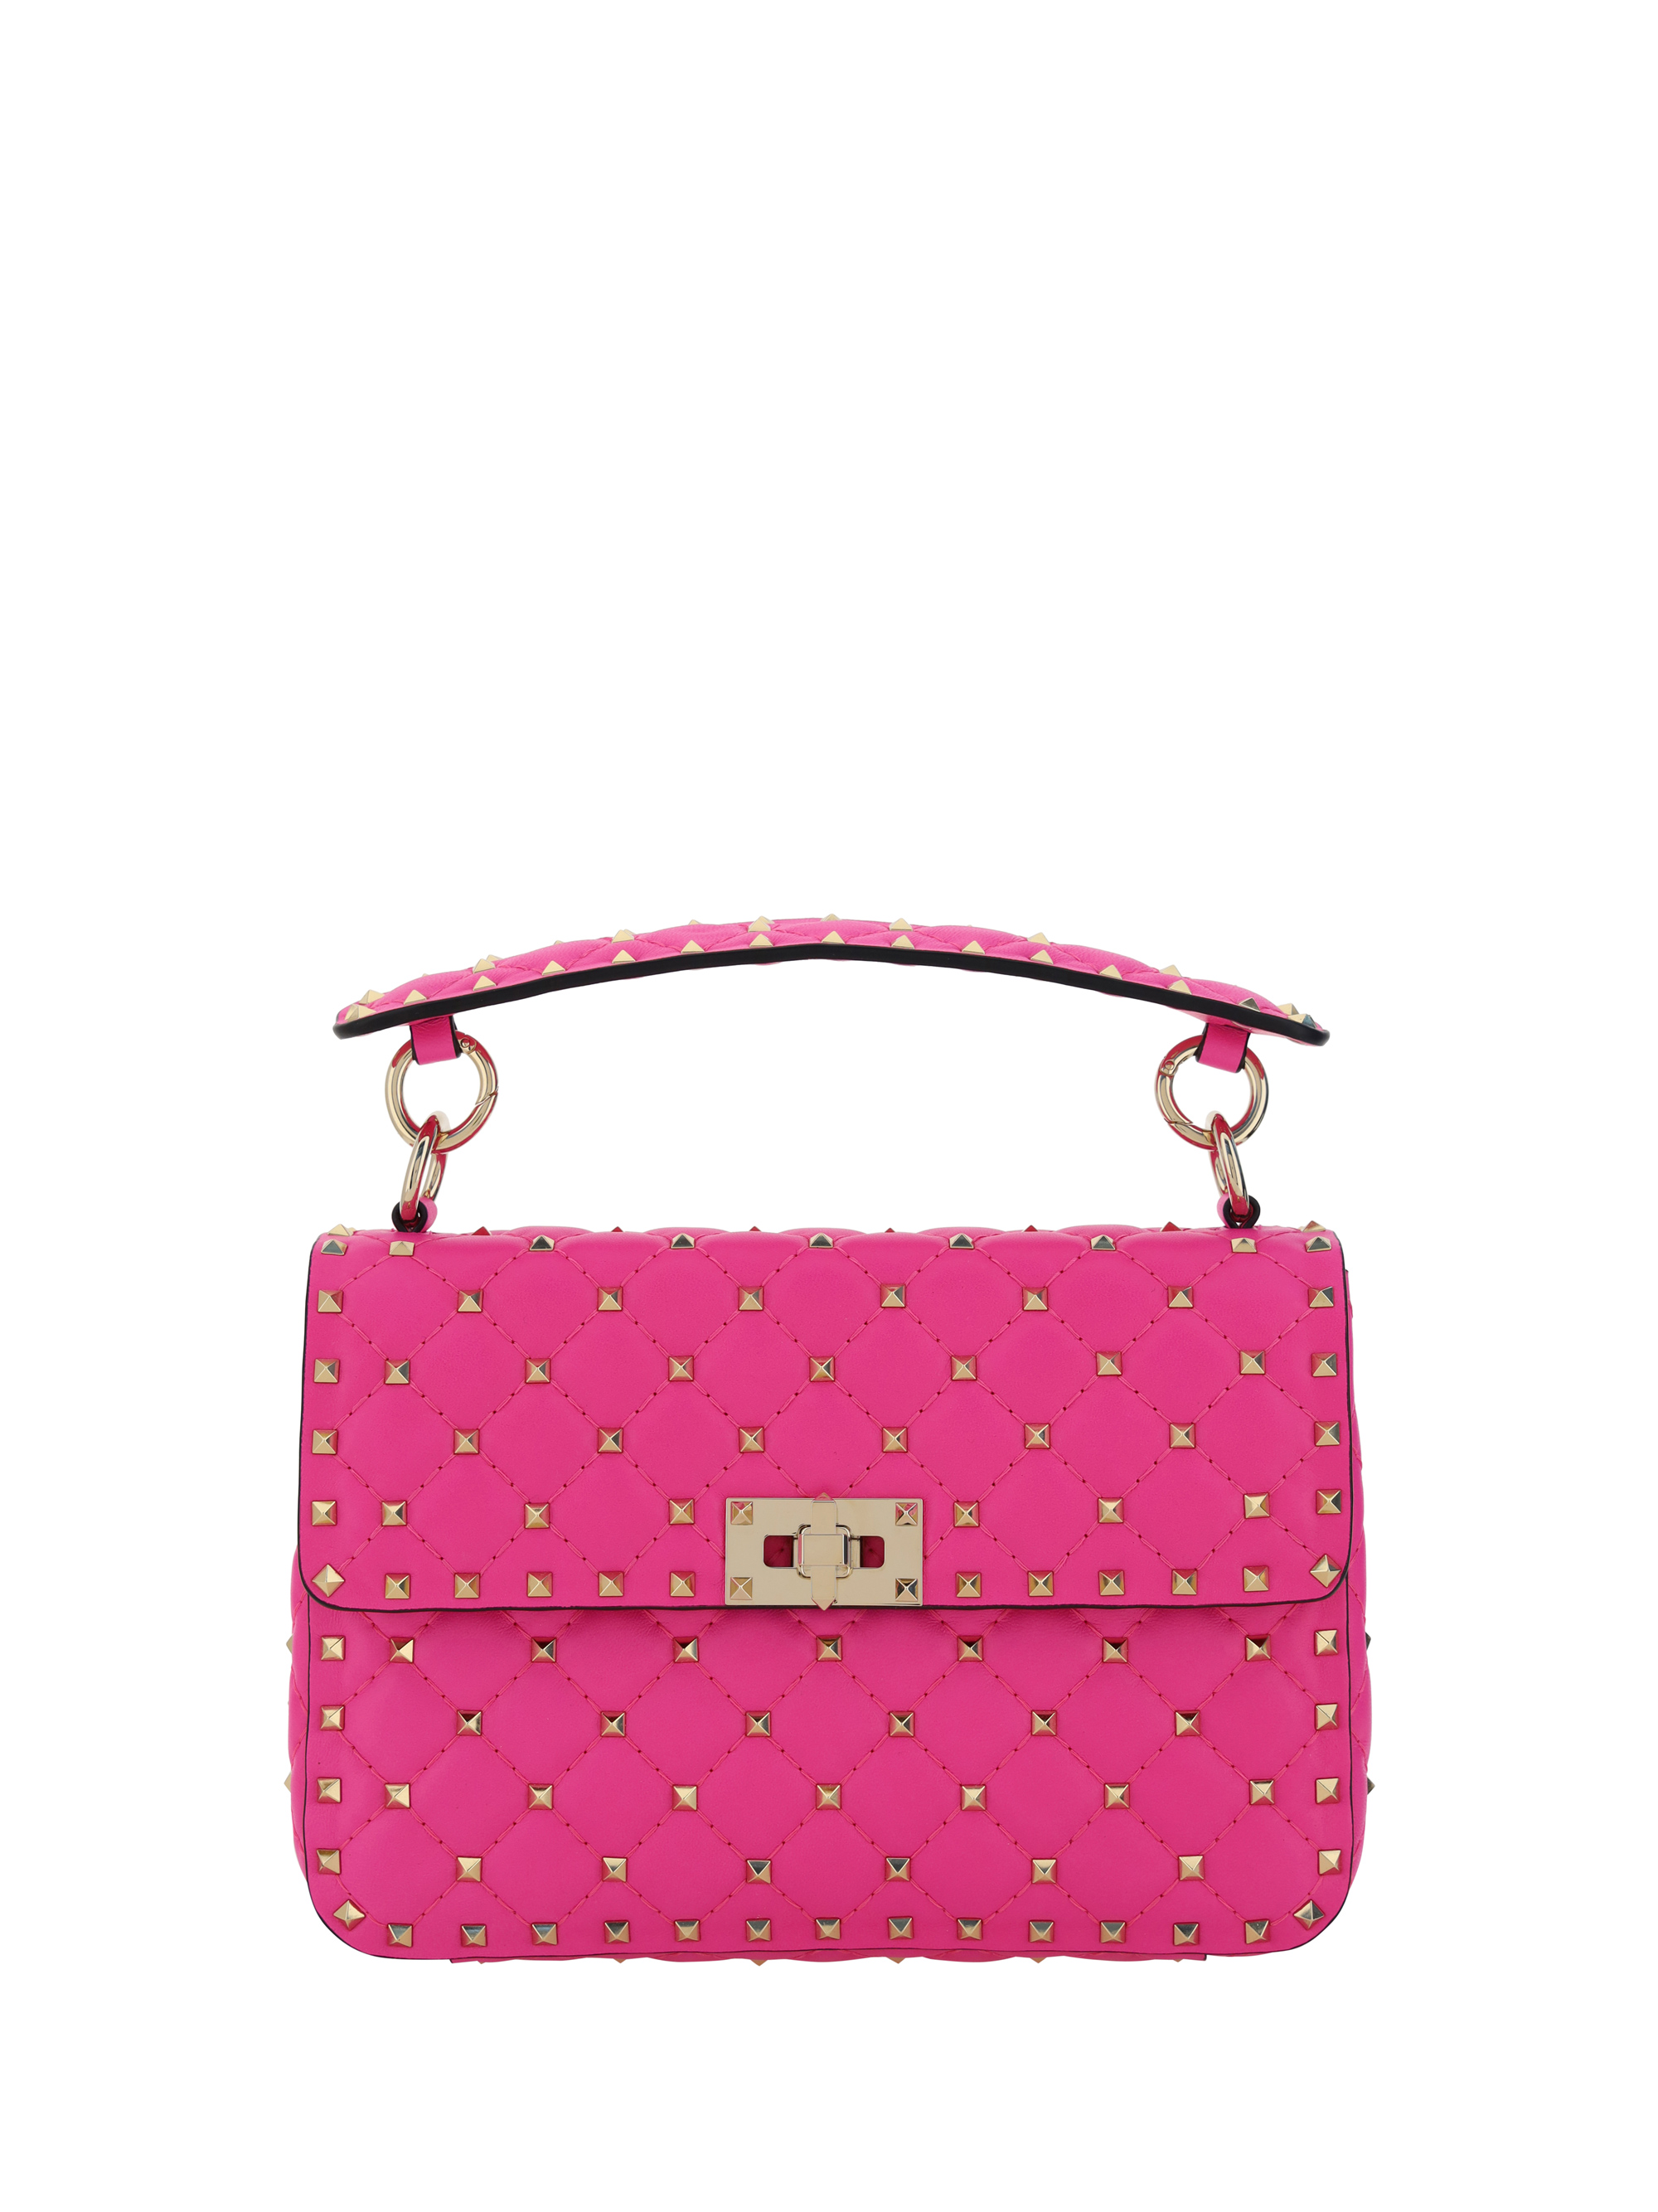 Valentino Garavani Women's Small Rockstud Leather Top Handle Bag - Flamingo Pink